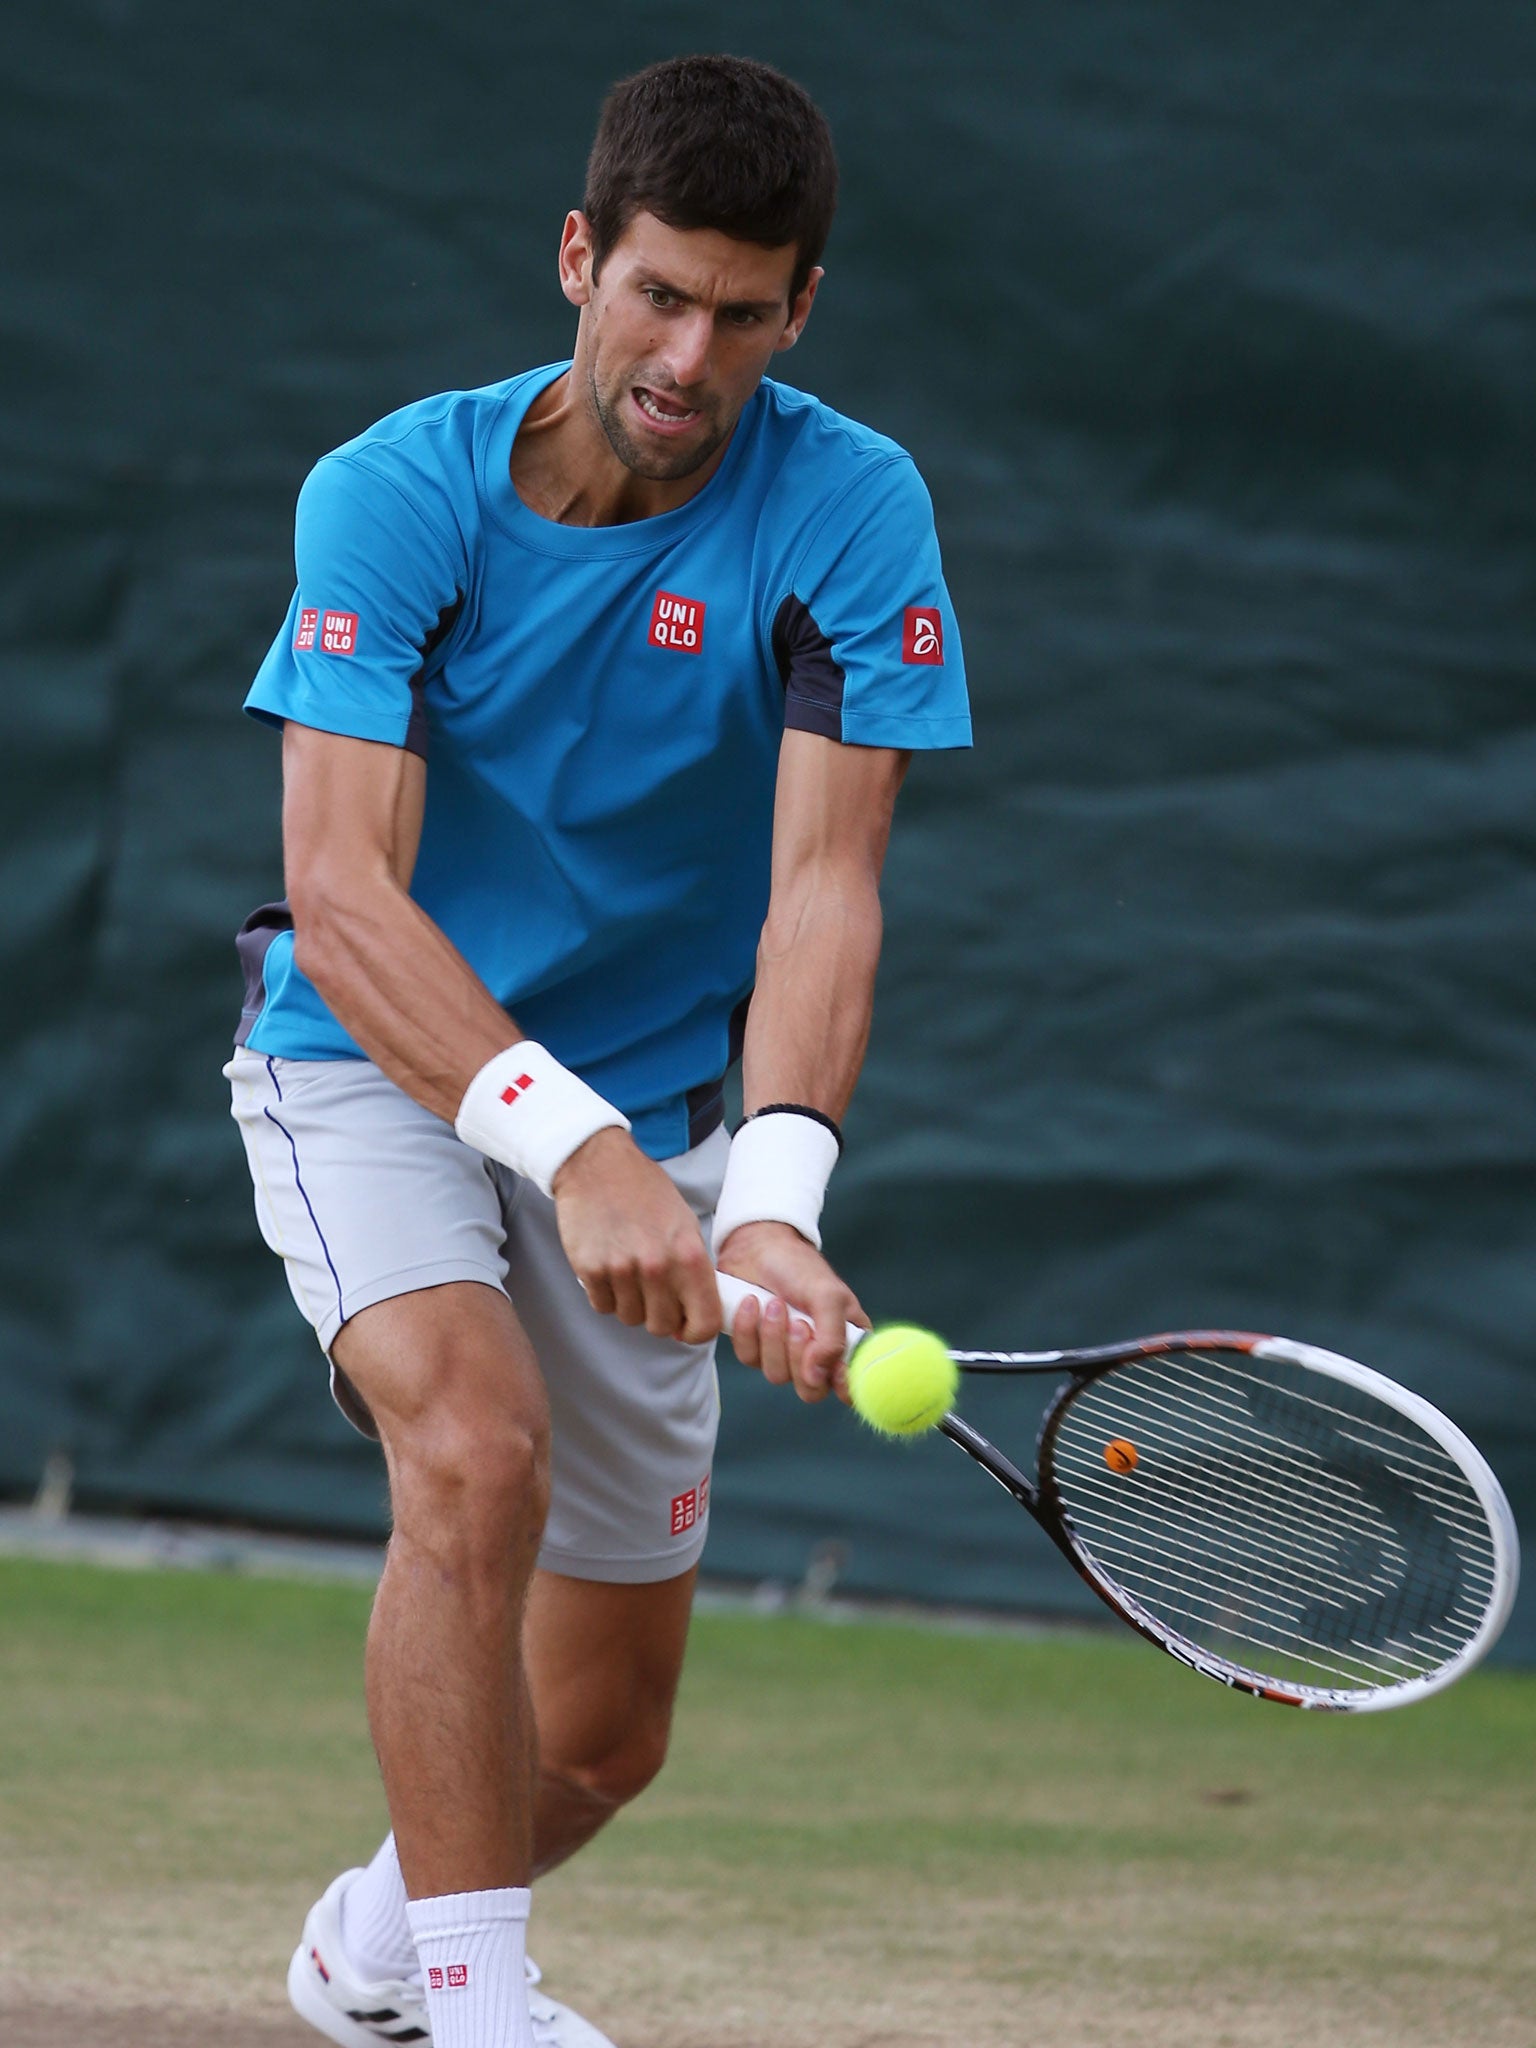 Novak Djokovic: The top seed will play his 13th consecutive Slam semi-final against Del Potro